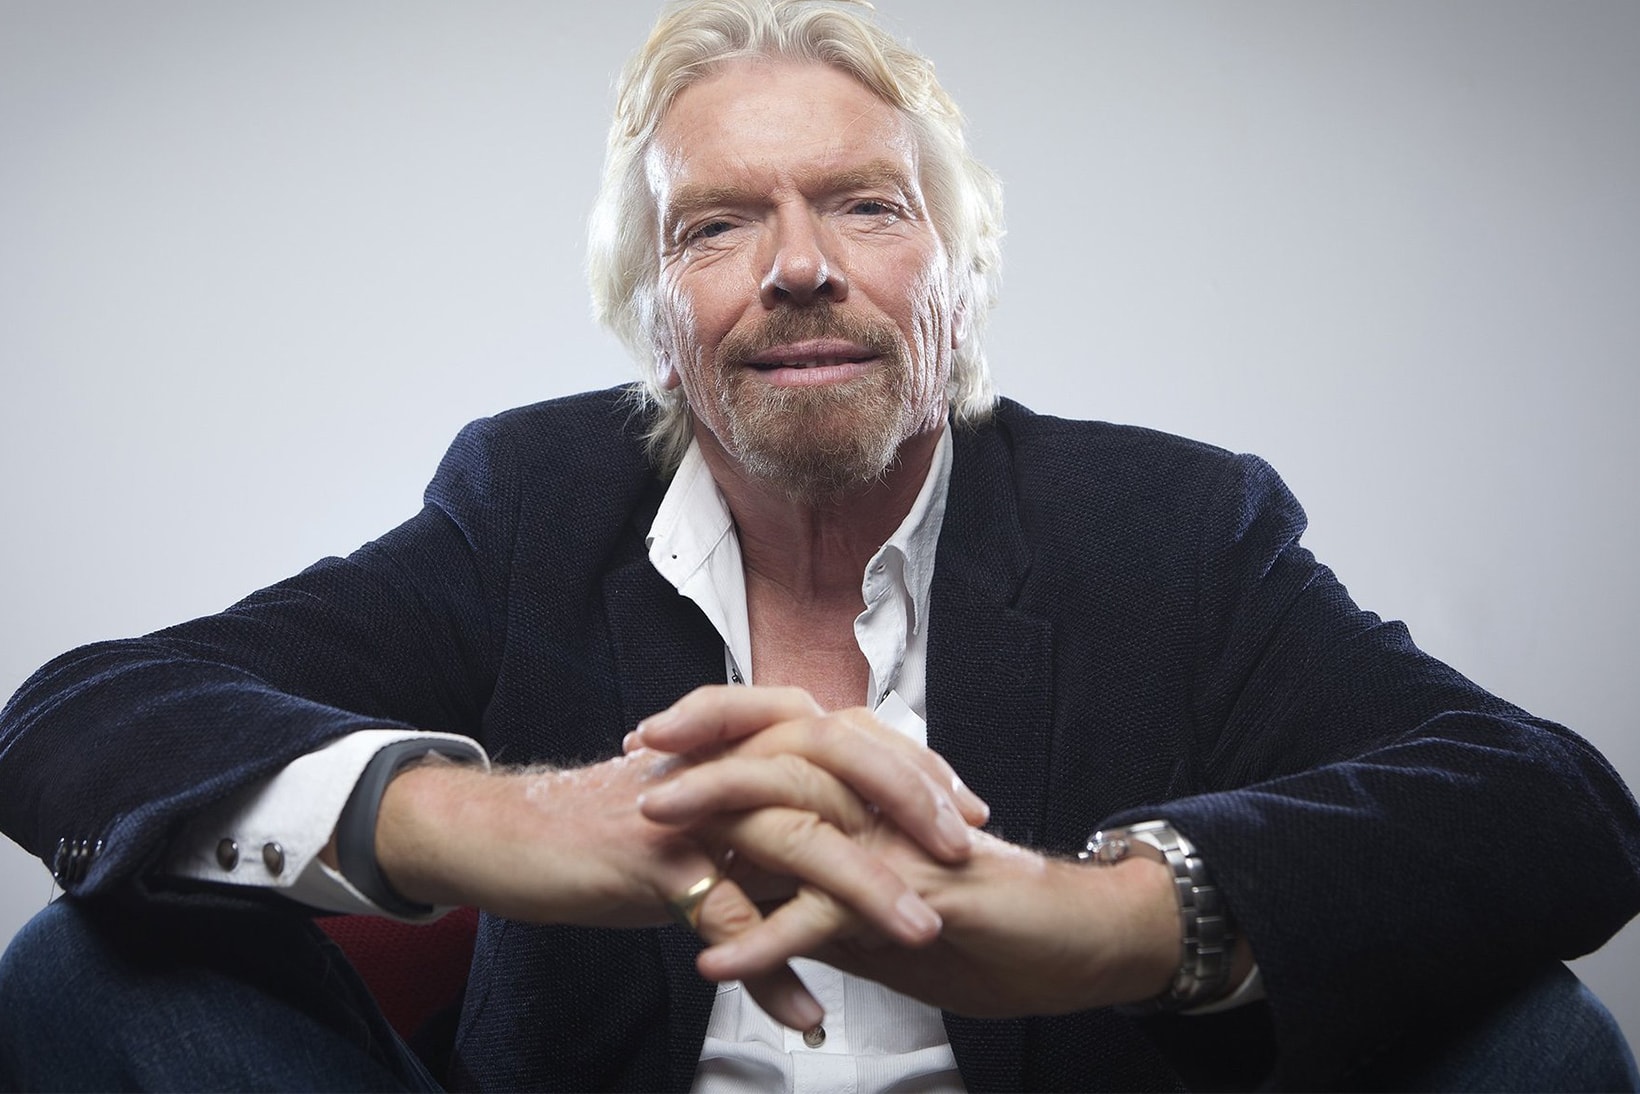 Richard Branson Virgin Hyperloop One Investment 2017 October 12